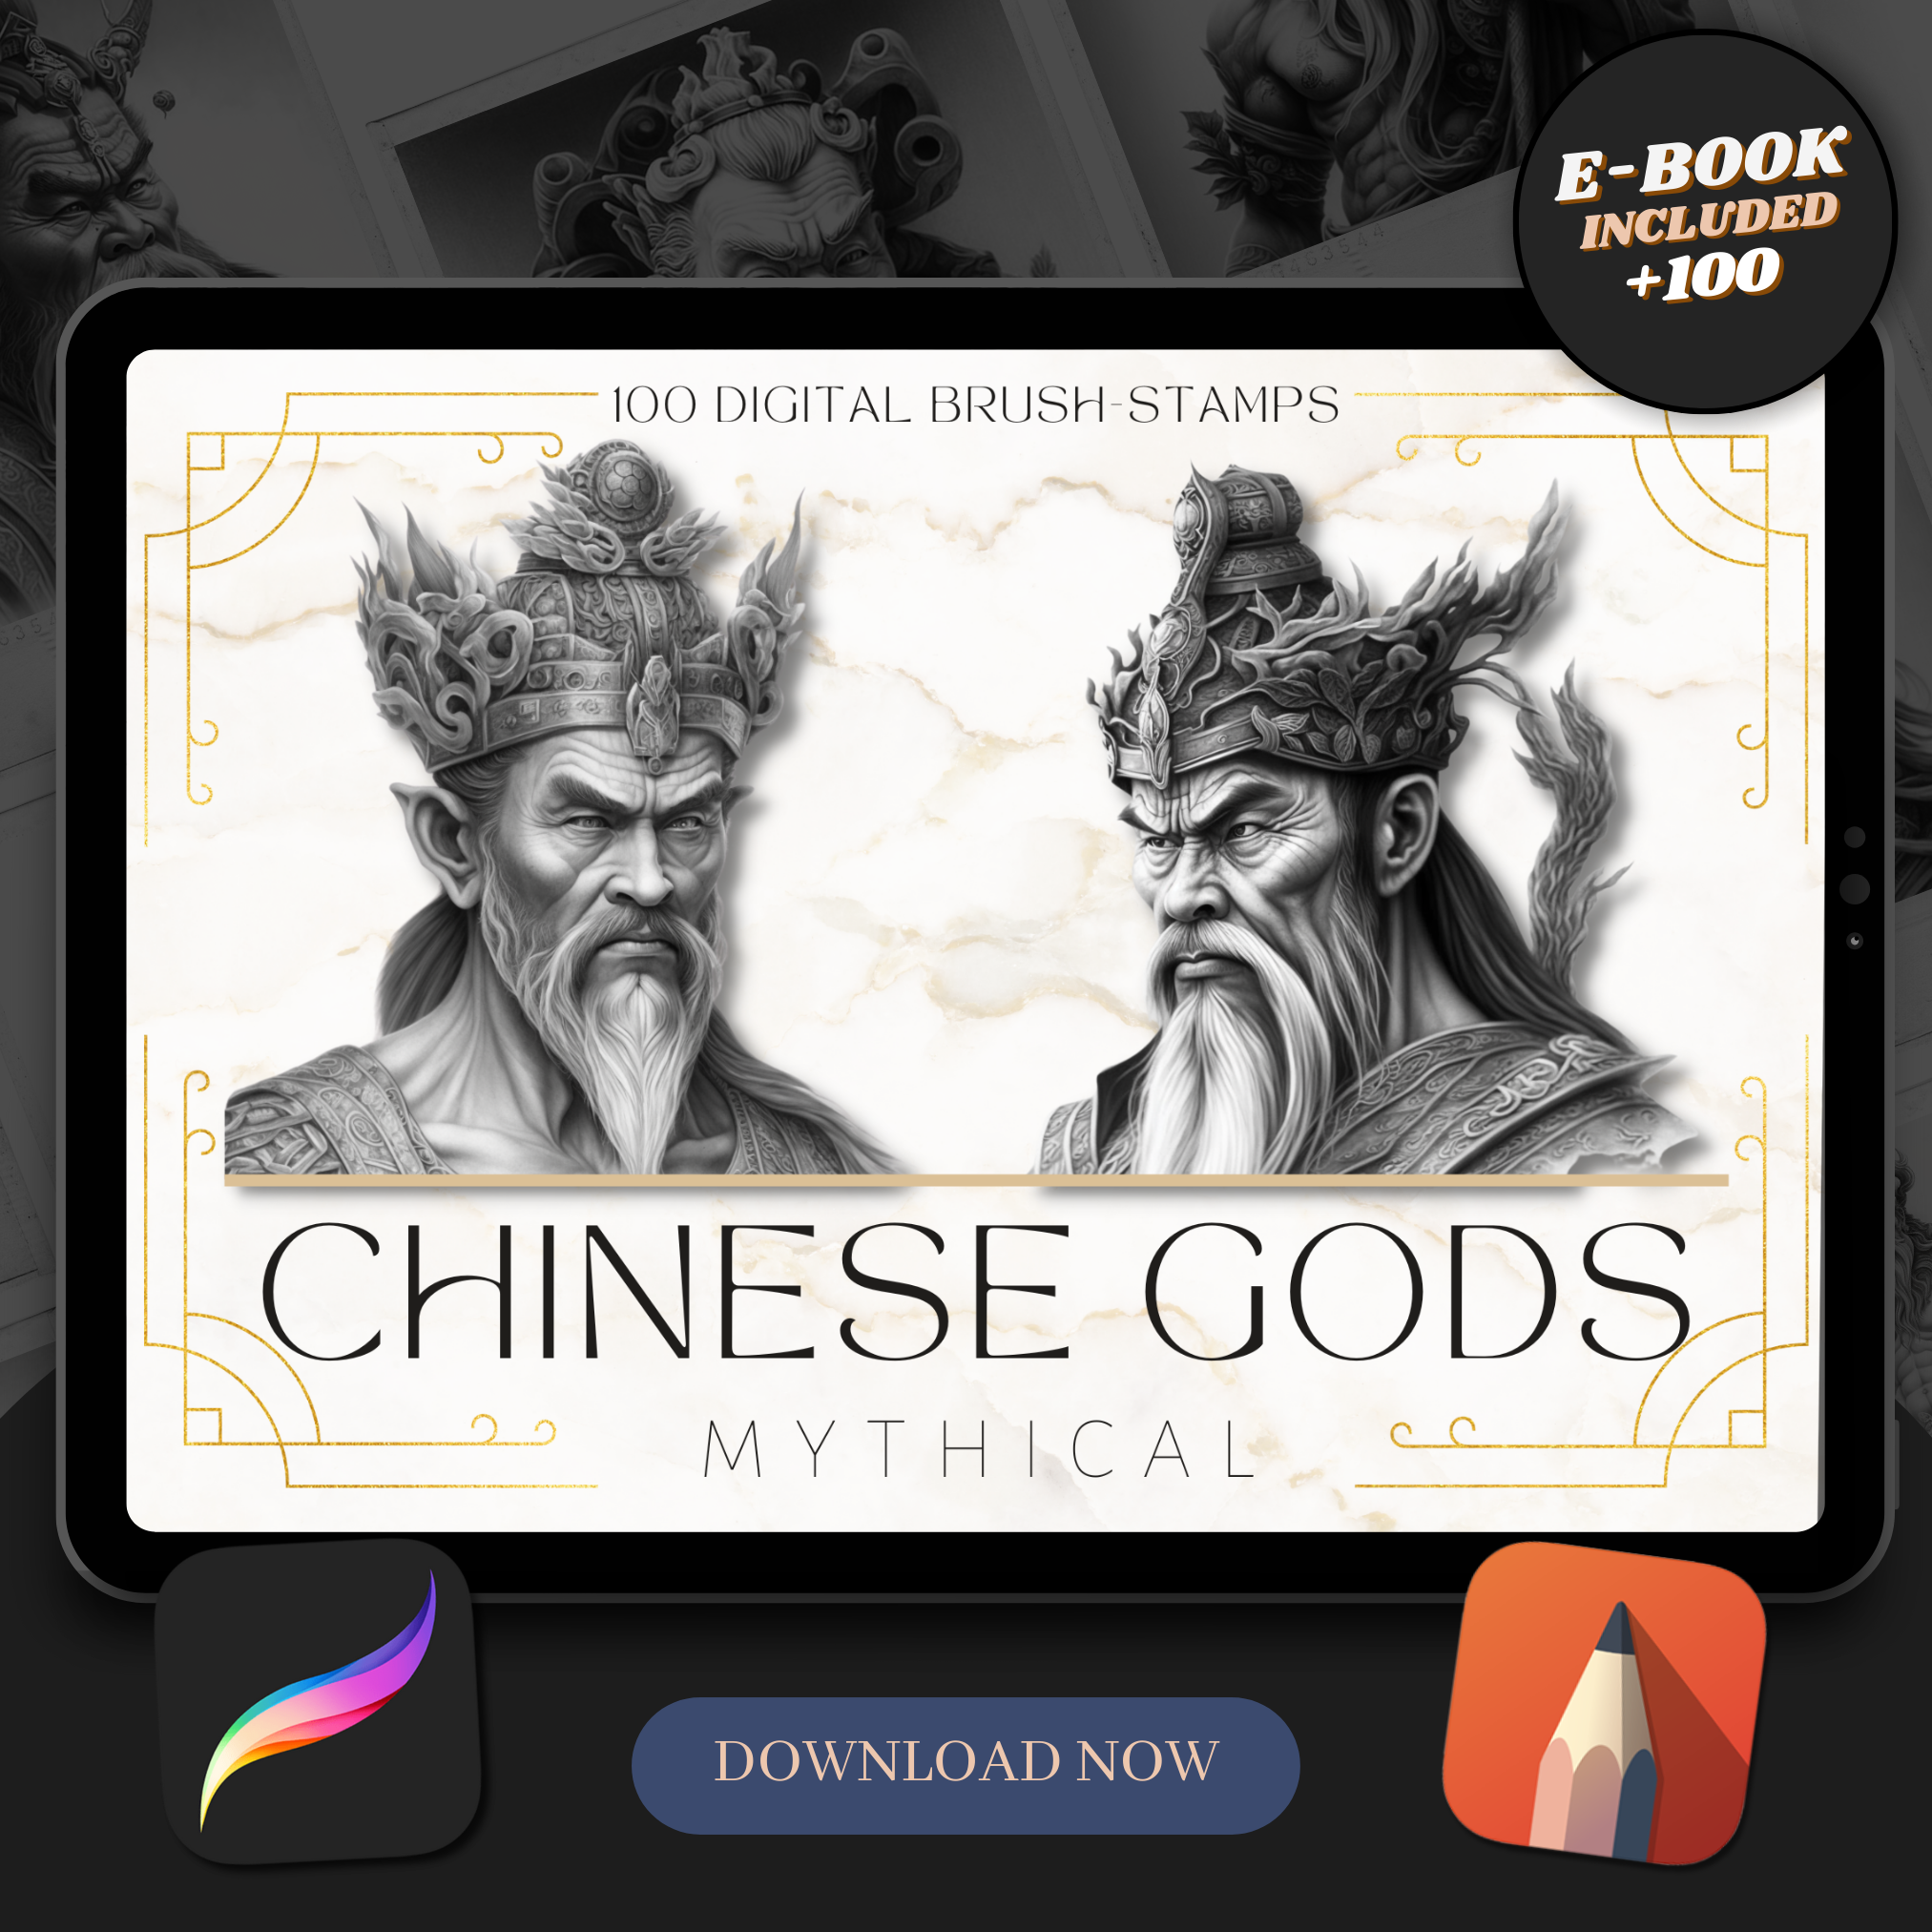 Chinese Gods Digital Design Collection: 50 Procreate & Sketchbook Images